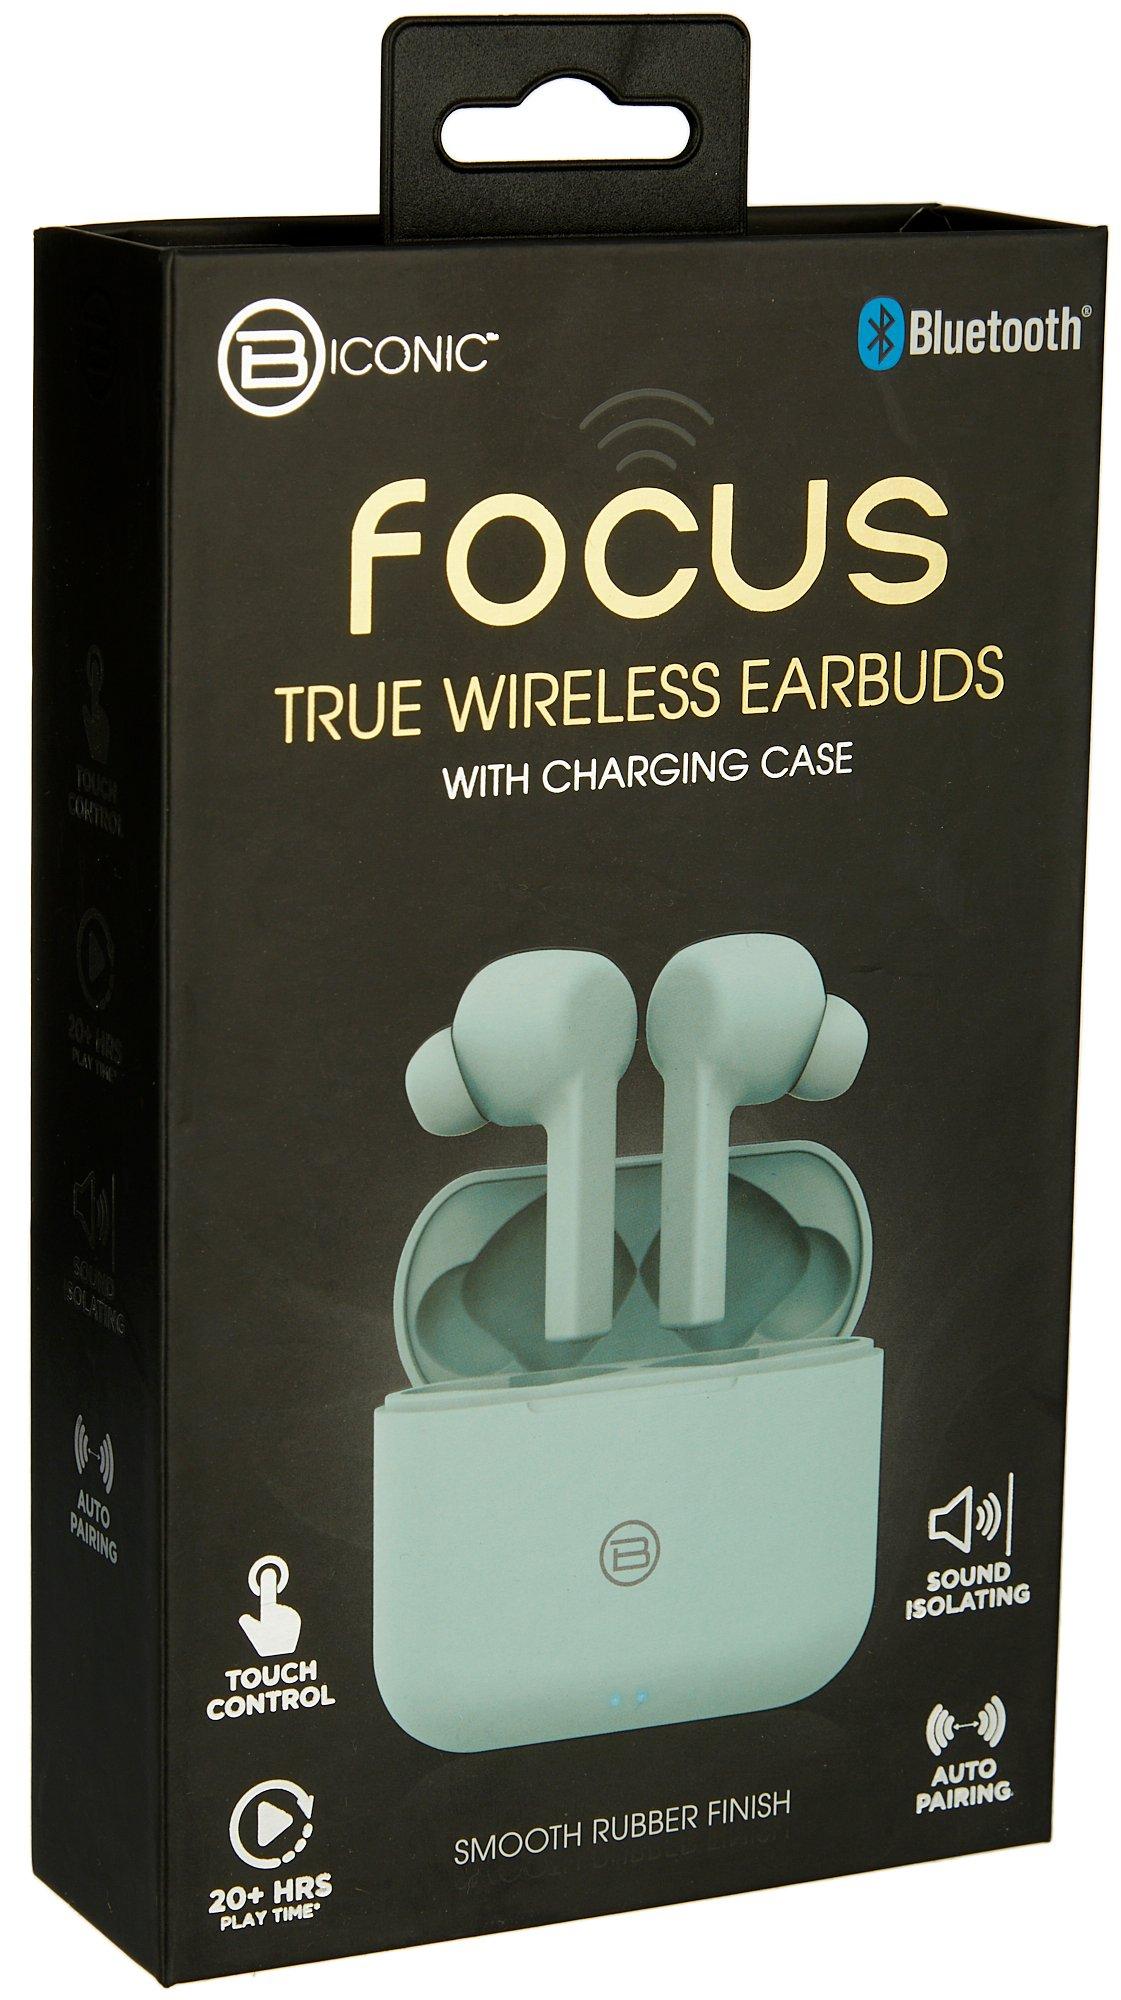 Bluetooth Focus True Wireless Earbuds